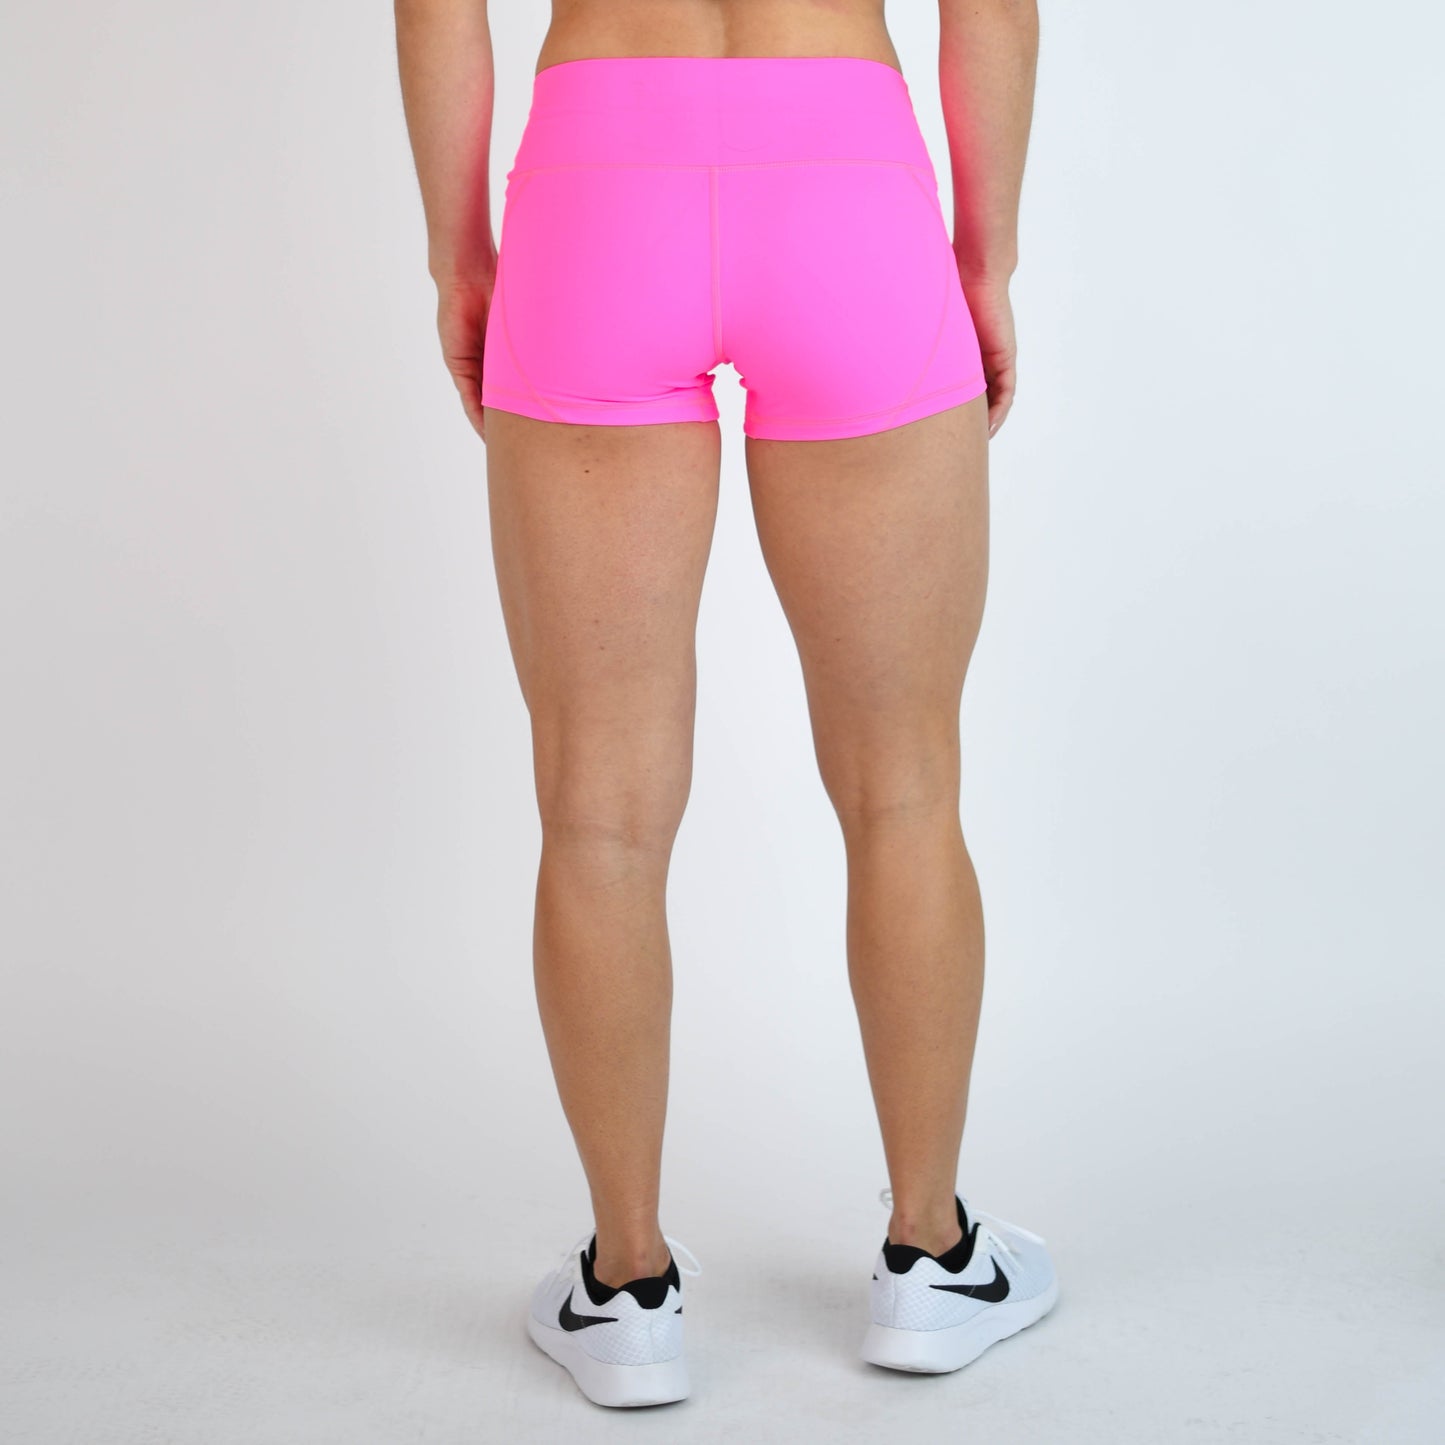 FLEO Neon Pink Shorts (Apex Contour)